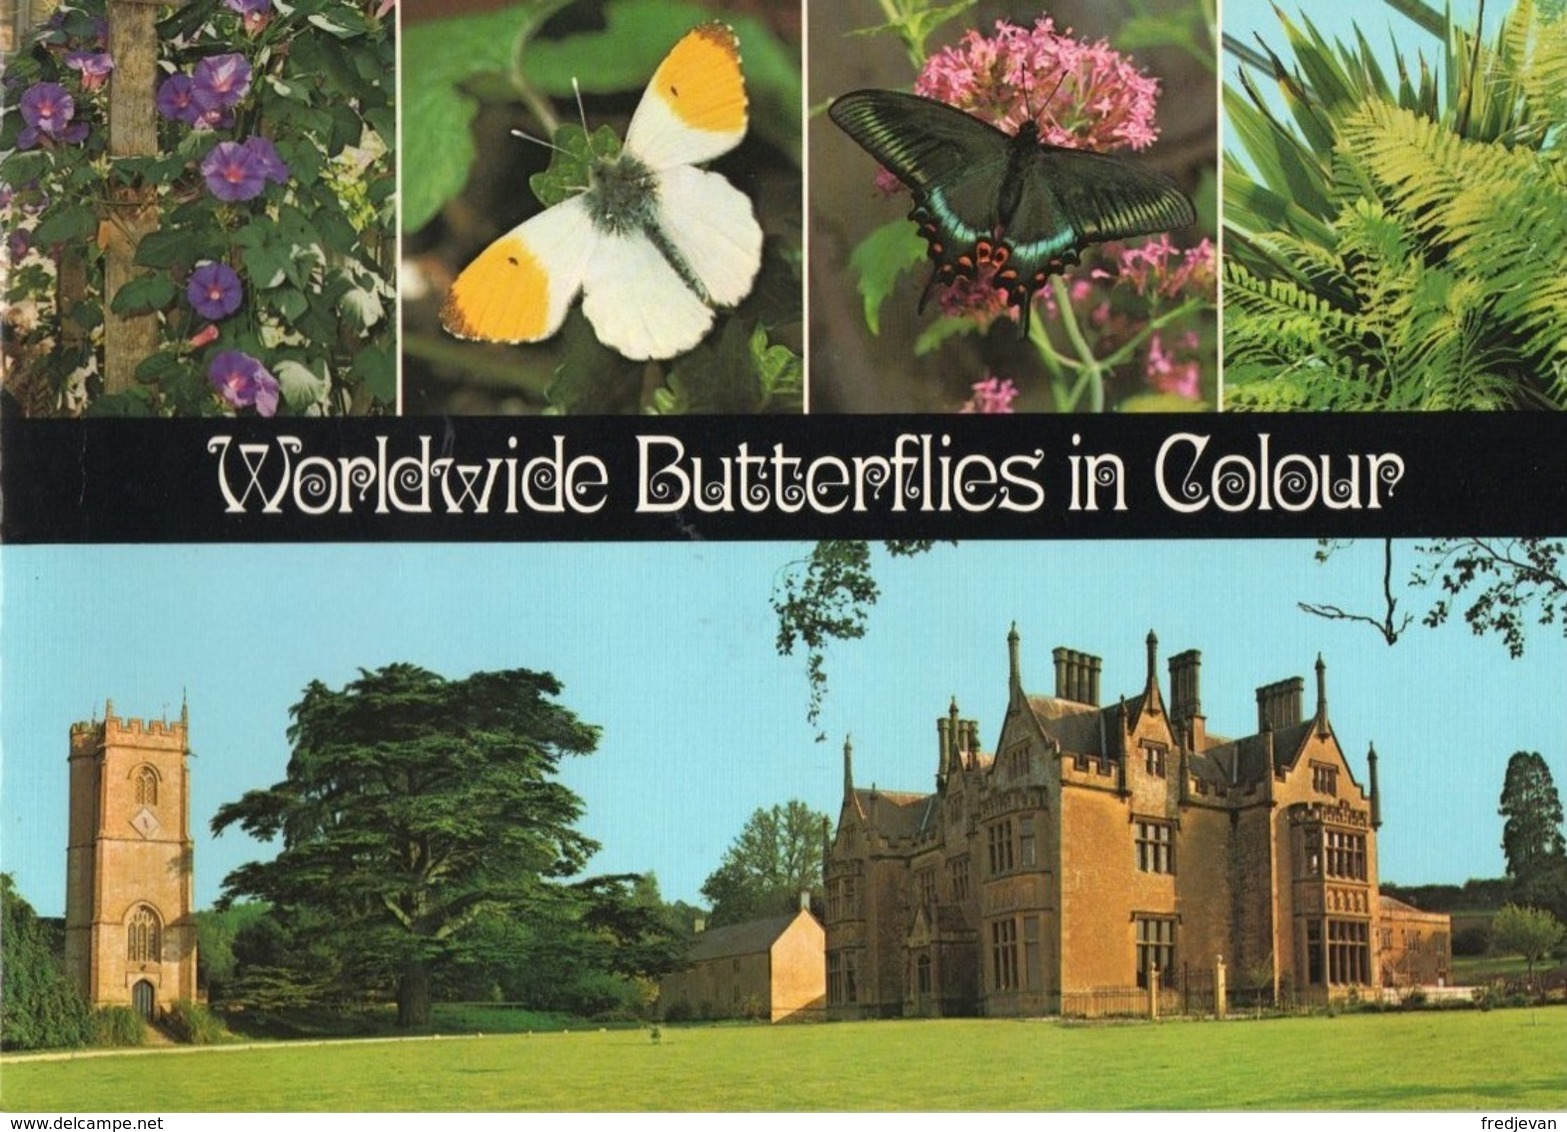 Boek / Worldwide Butterflies In Colour Met Zeer Mooi Foto's (Engels) - Fauna